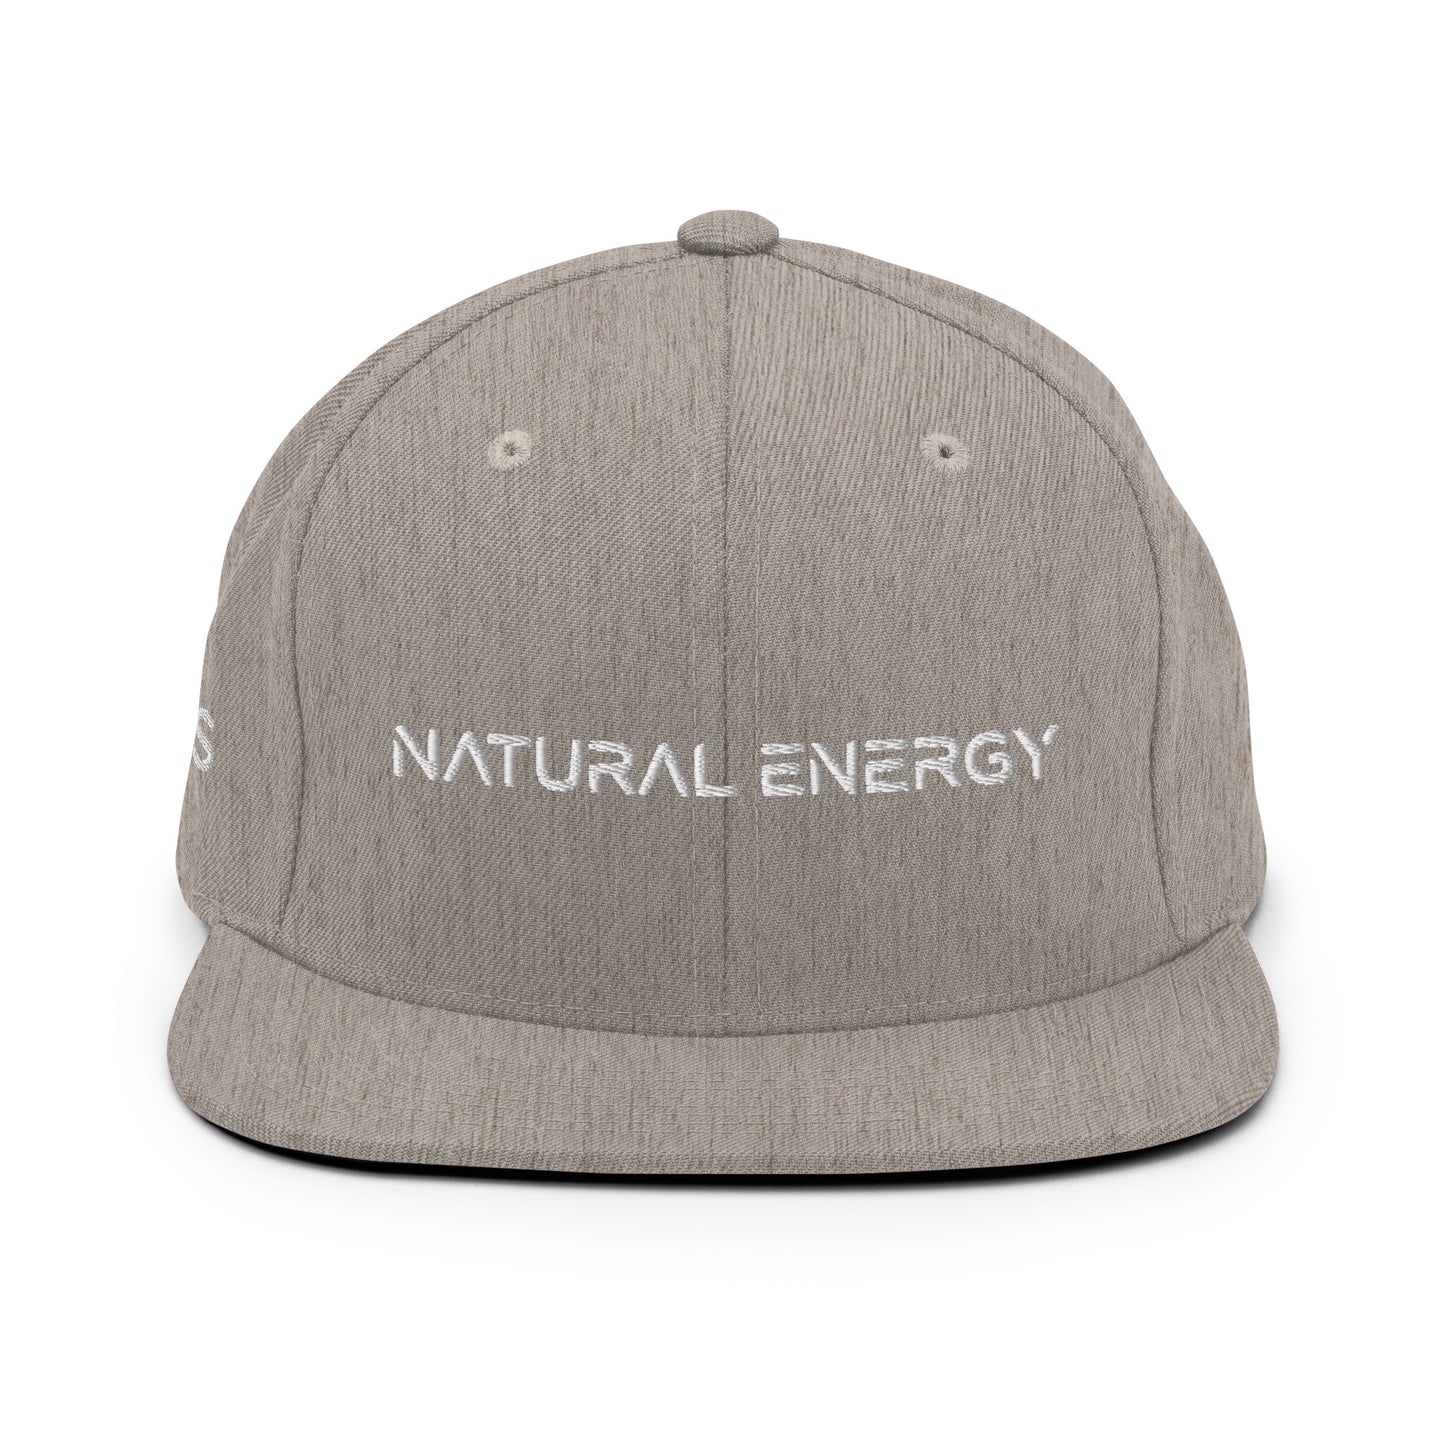 Natural Energy Flatbill